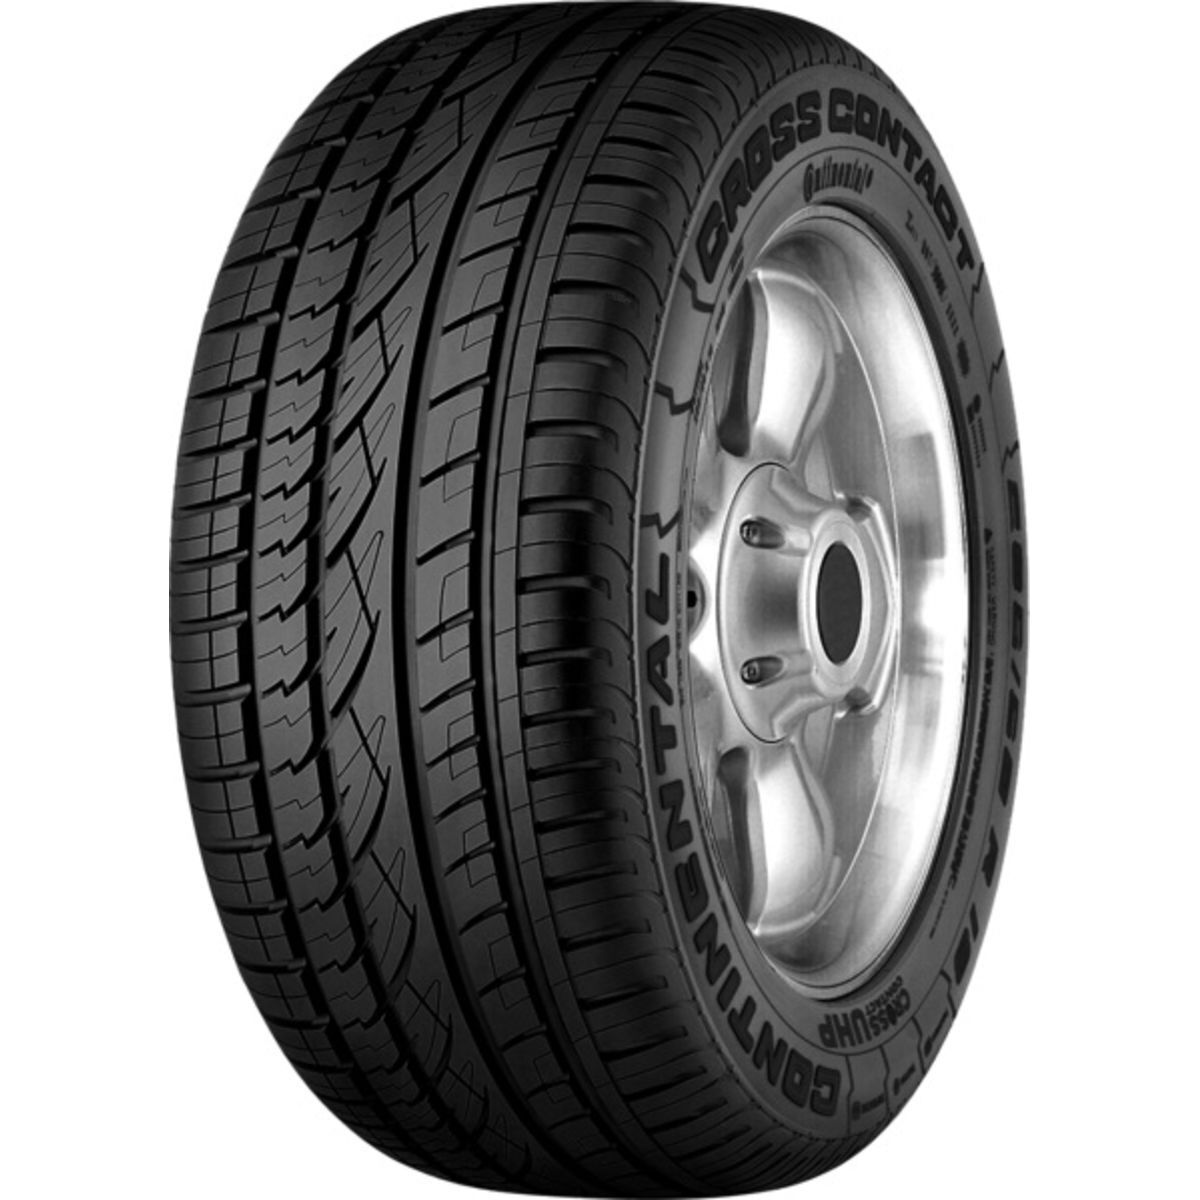 Neumáticos de verano CONTINENTAL CrossContact UHP 235/60R16 100H